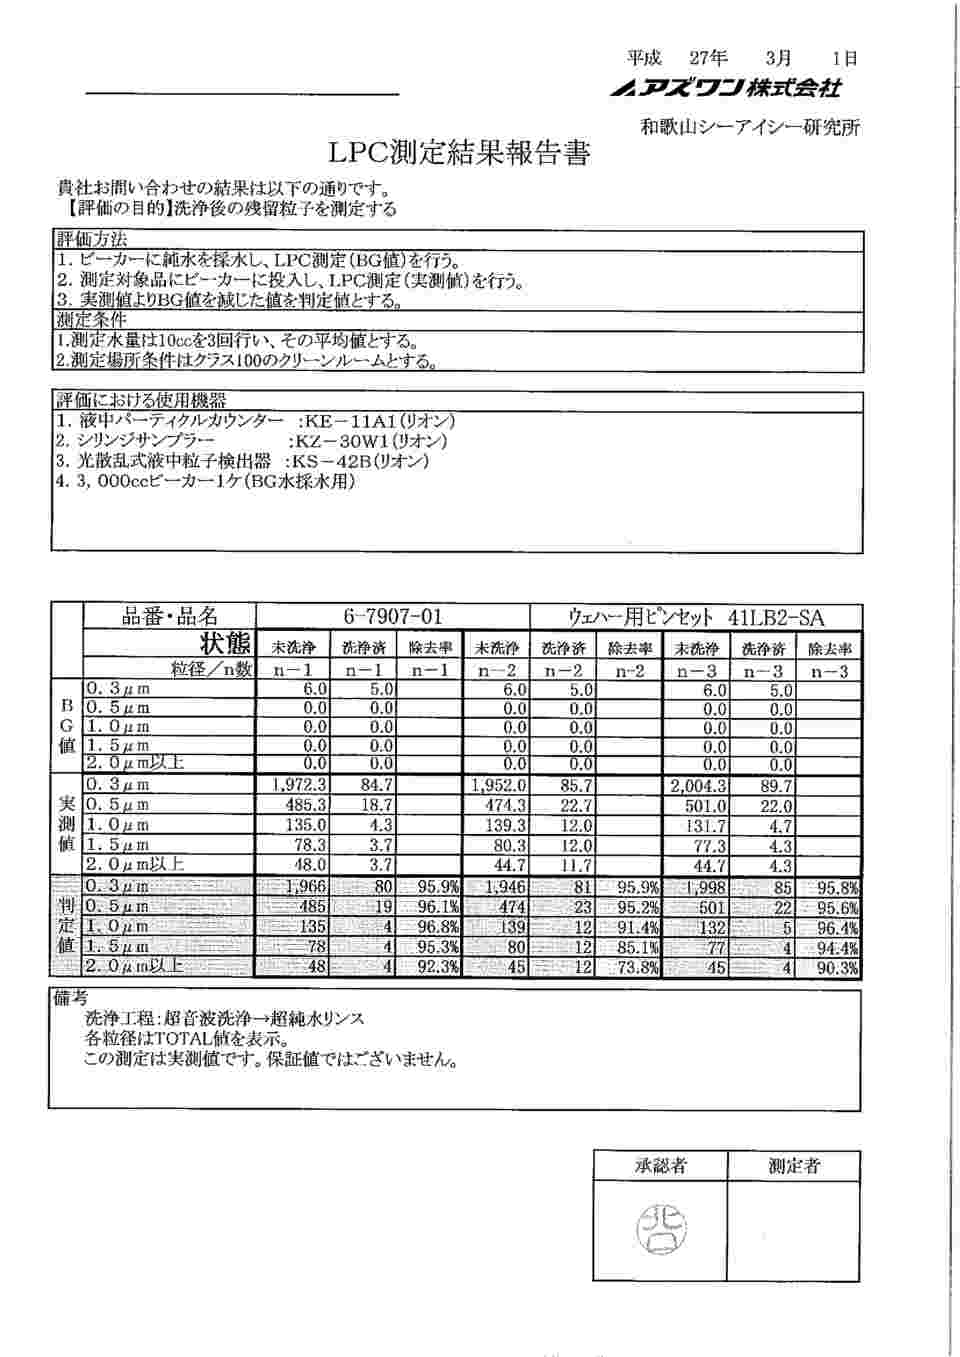 6-7907-02 MEISTERピンセット ウェハー用 幅広 耐酸鋼 41LB4-SA 【AXEL 